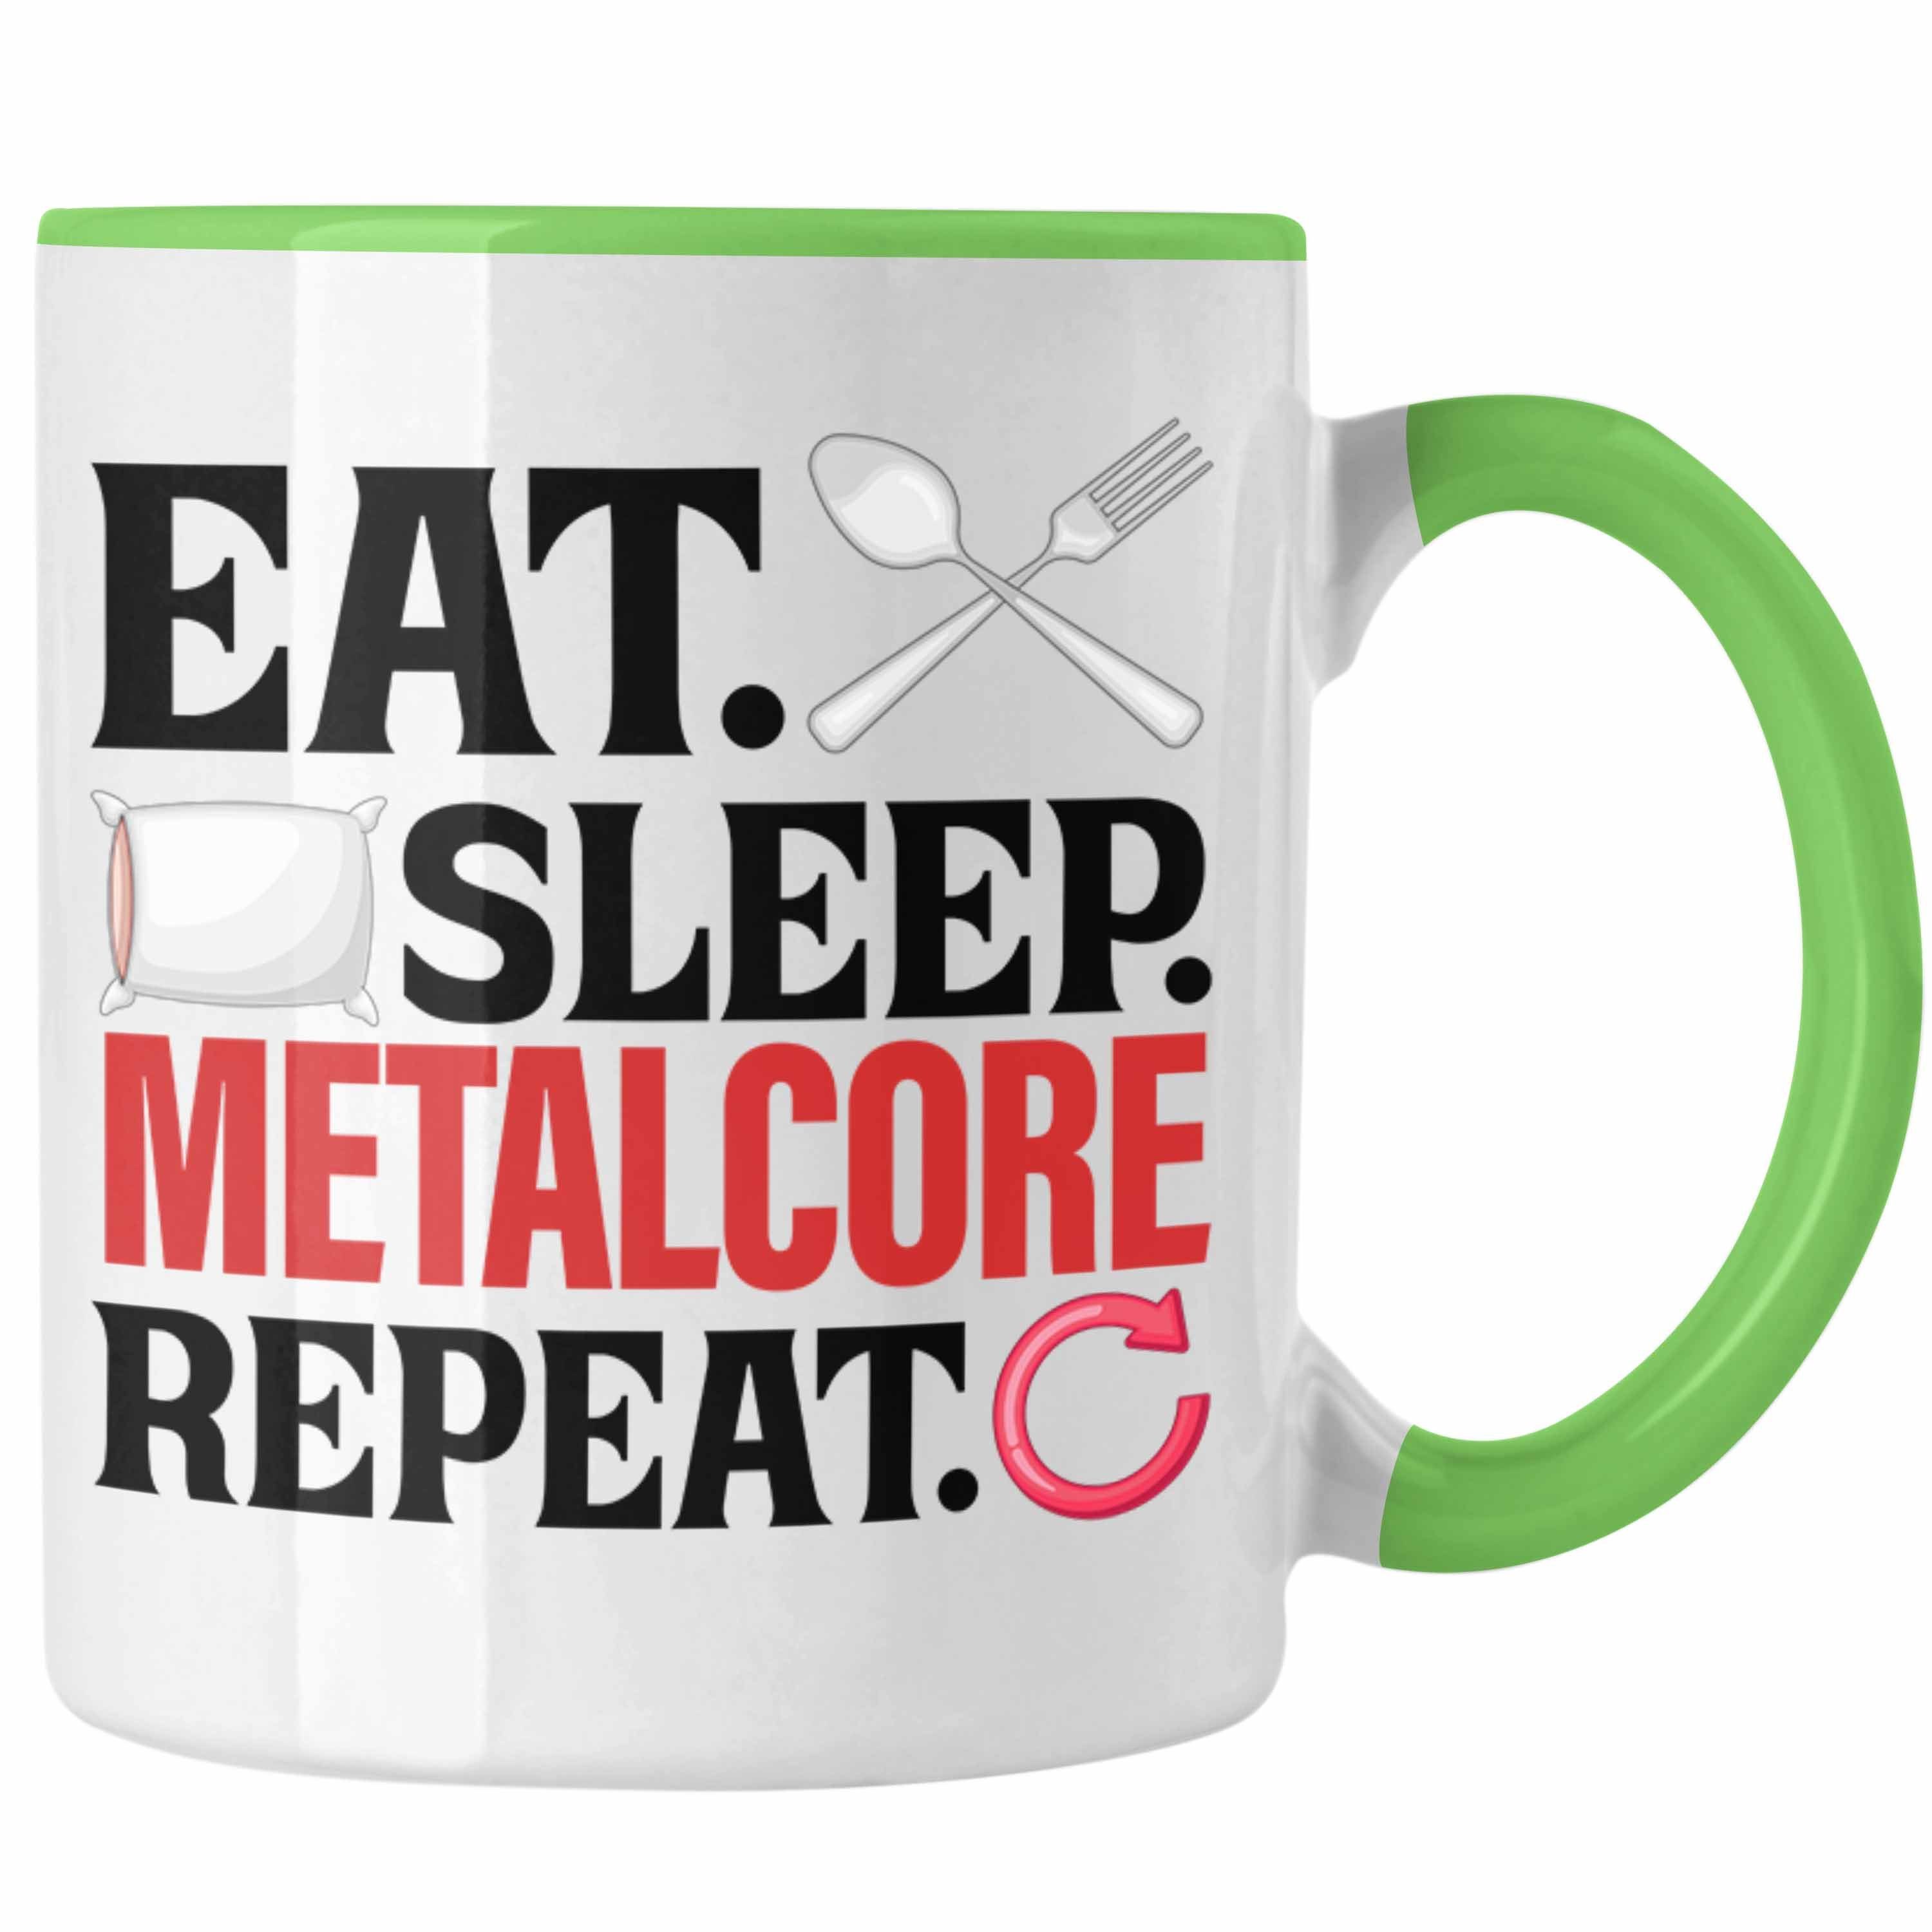 Musik Metalcore Tasse Tasse Heavy Repeat Eat Metal Trendation Sleep Grün Geschenk